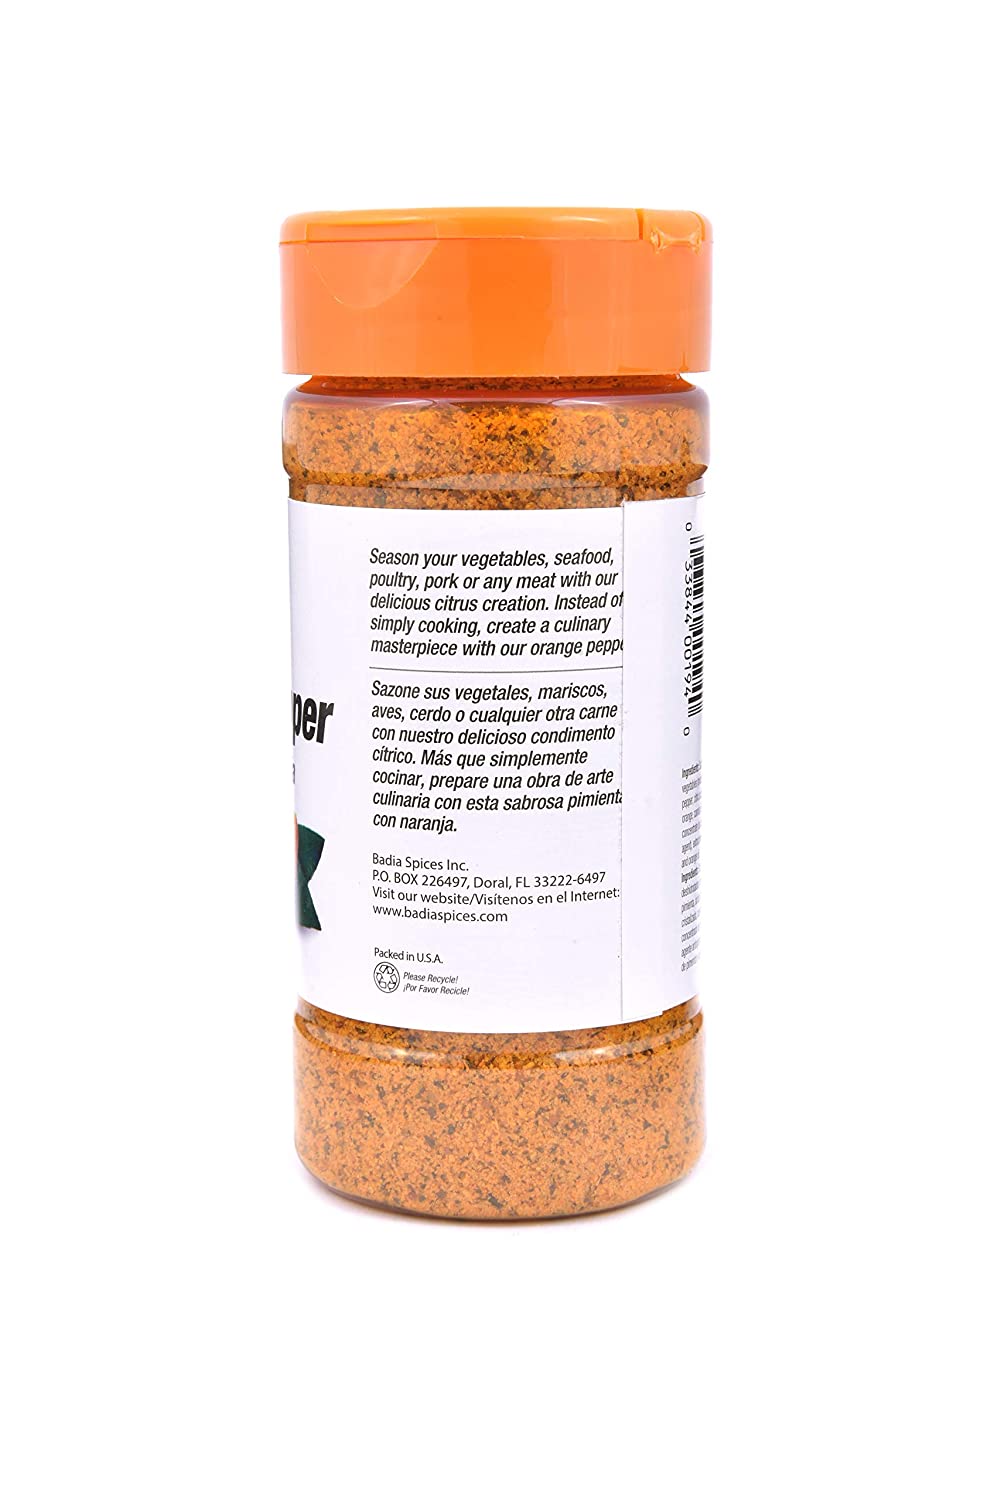 Badia Orange Pepper Seasoning, 26 Ounce (Pack of 4)